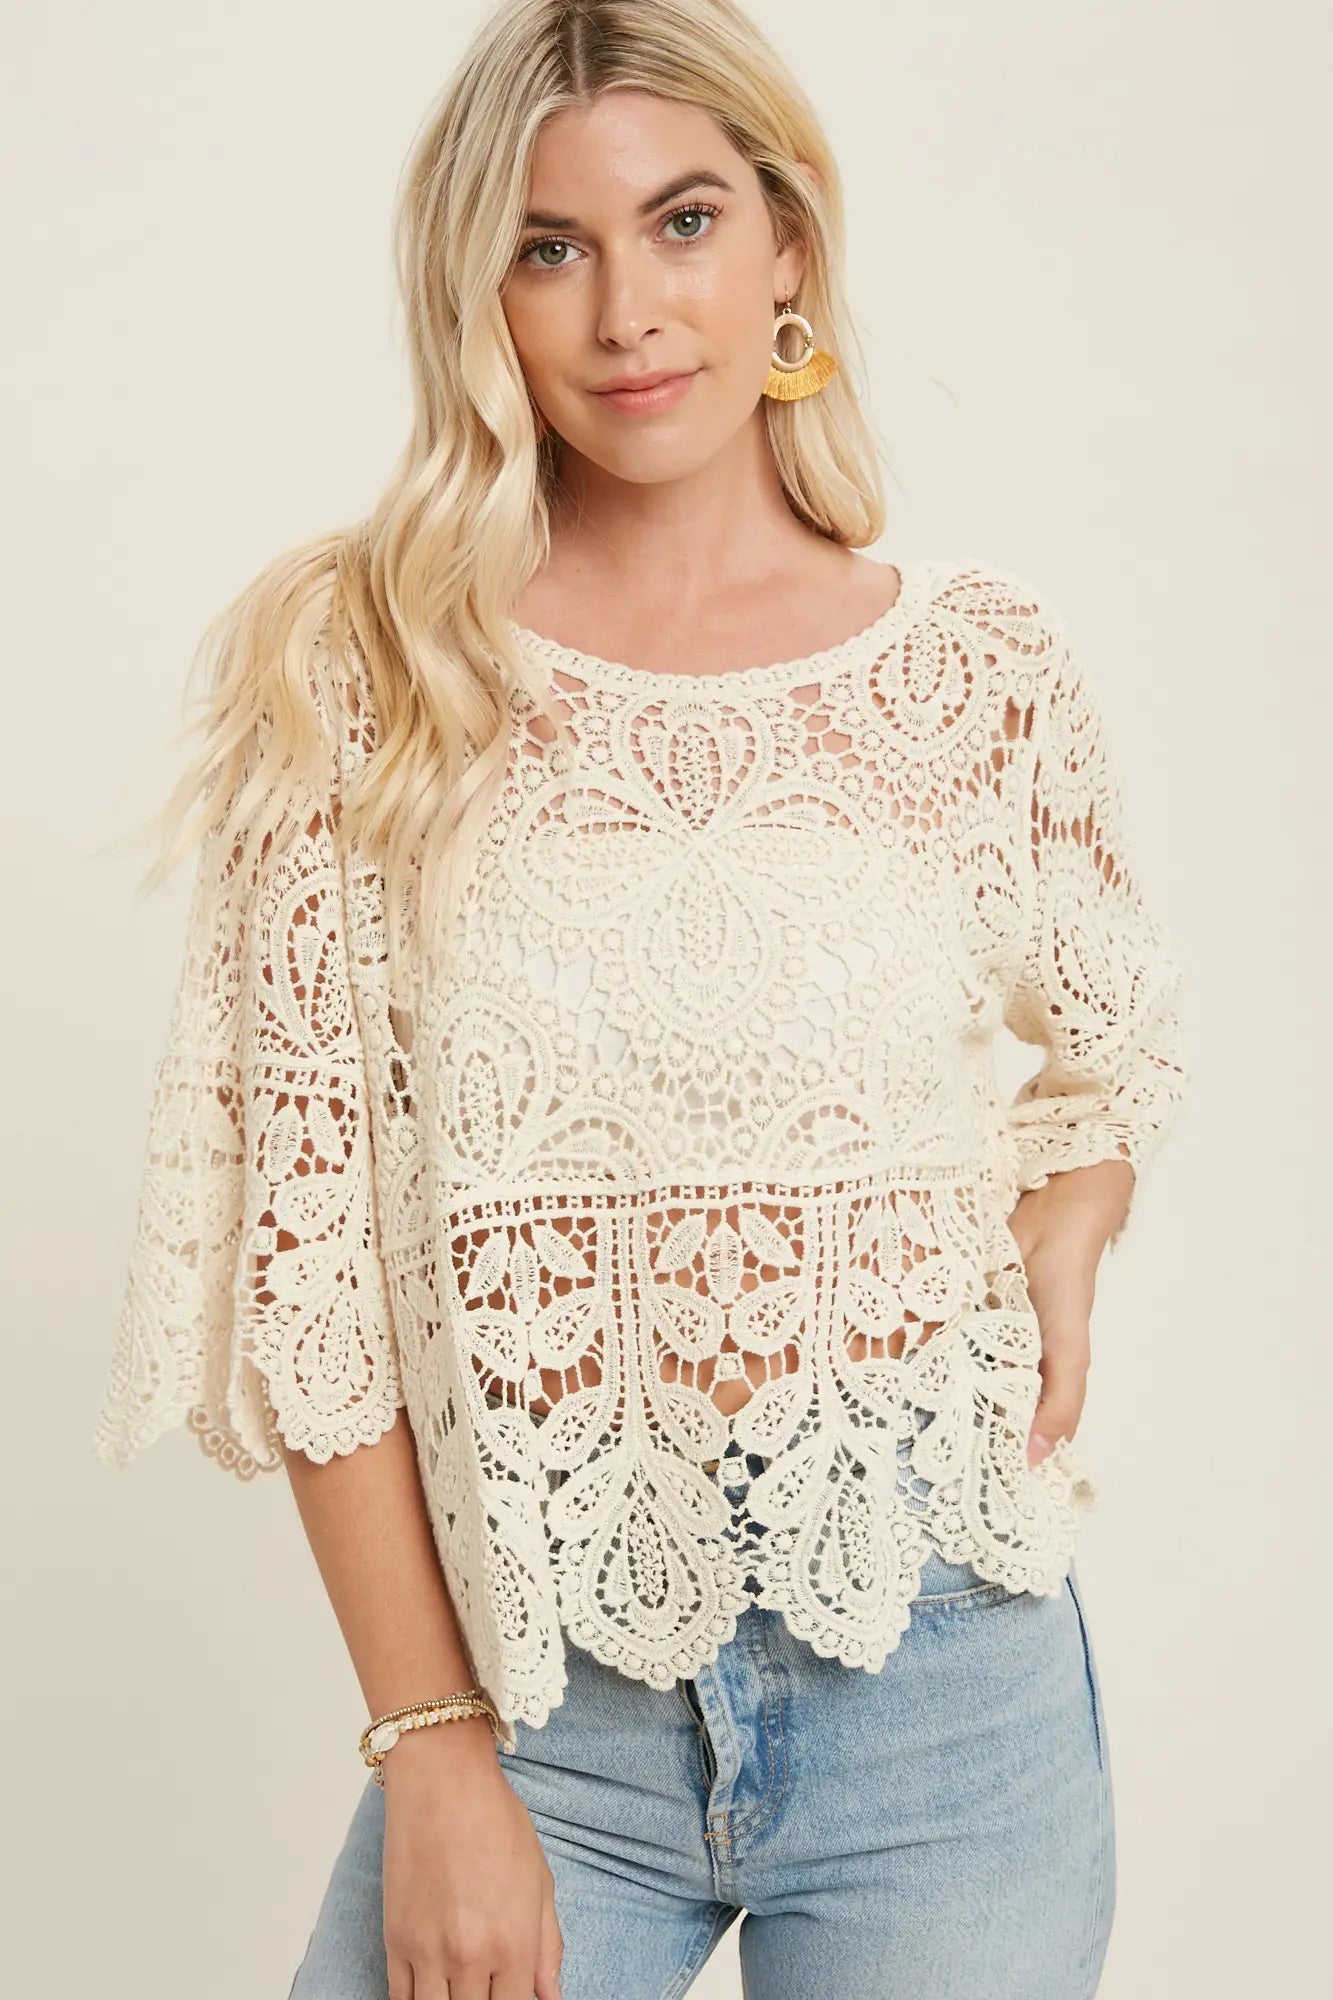 Bluivy Crochet Lace Top